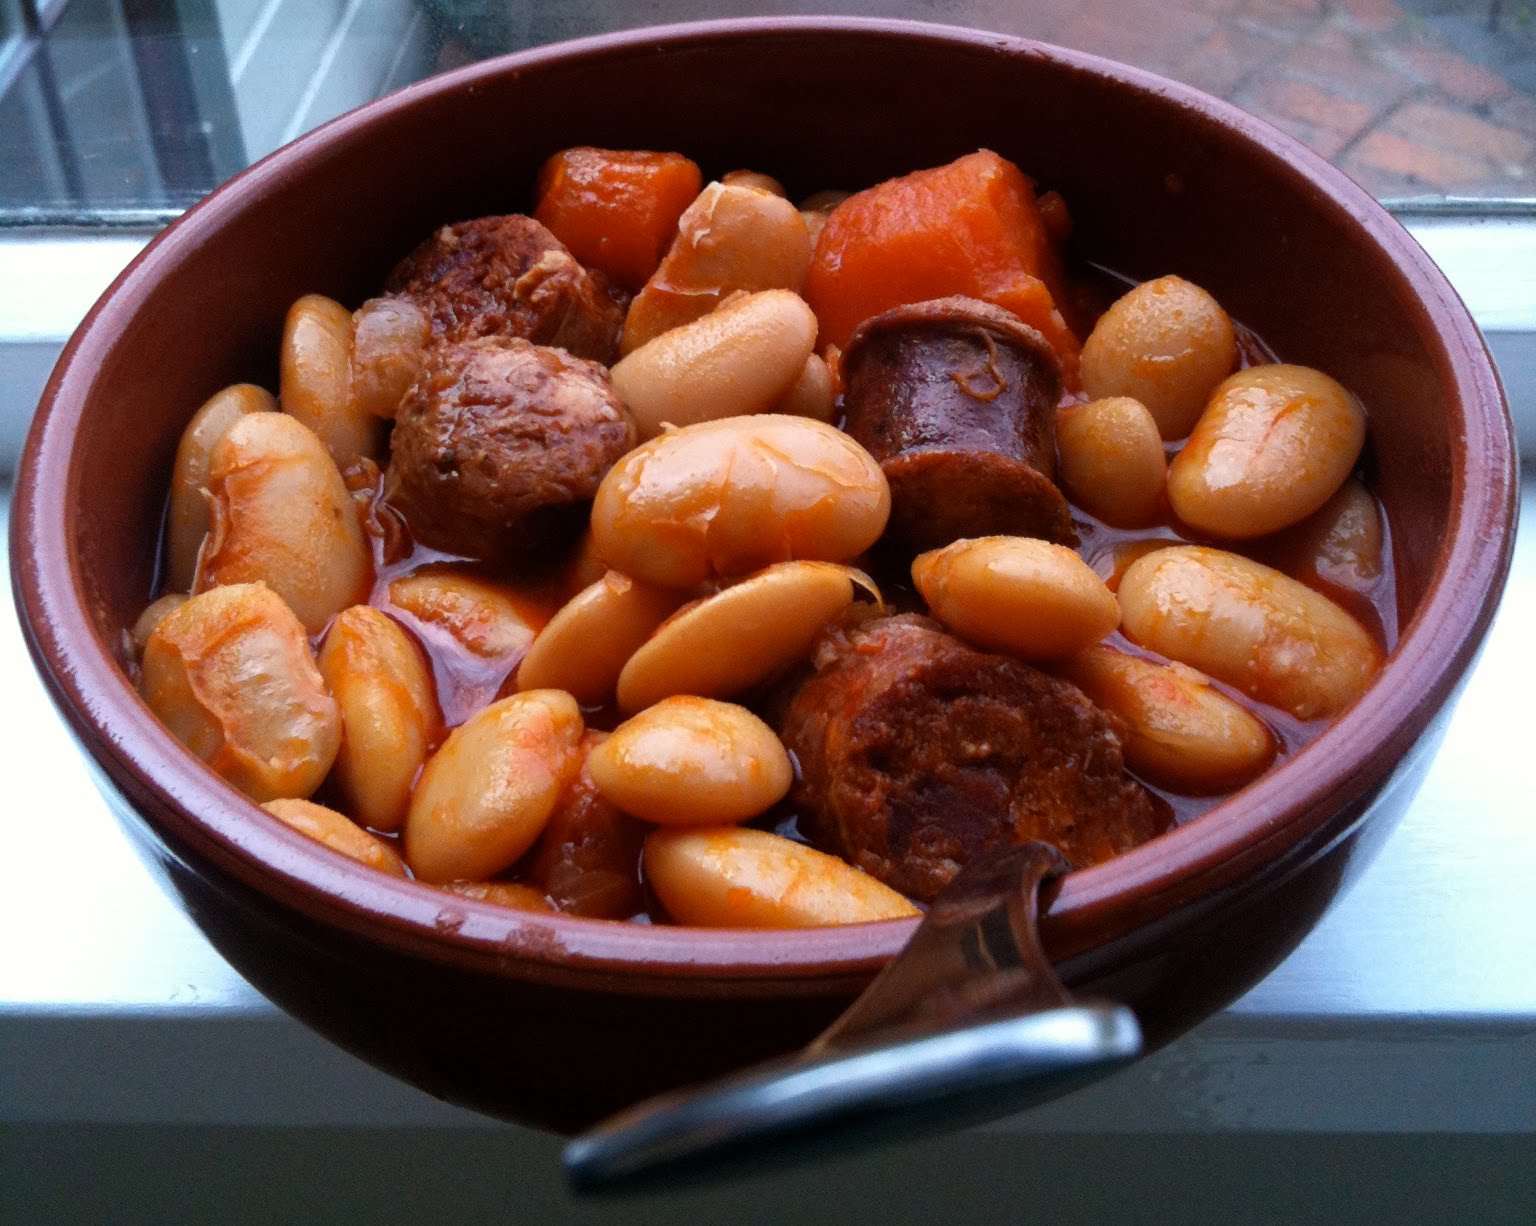 Las hambres: "Judias blancas con chorizo" White beans and chorizo stew